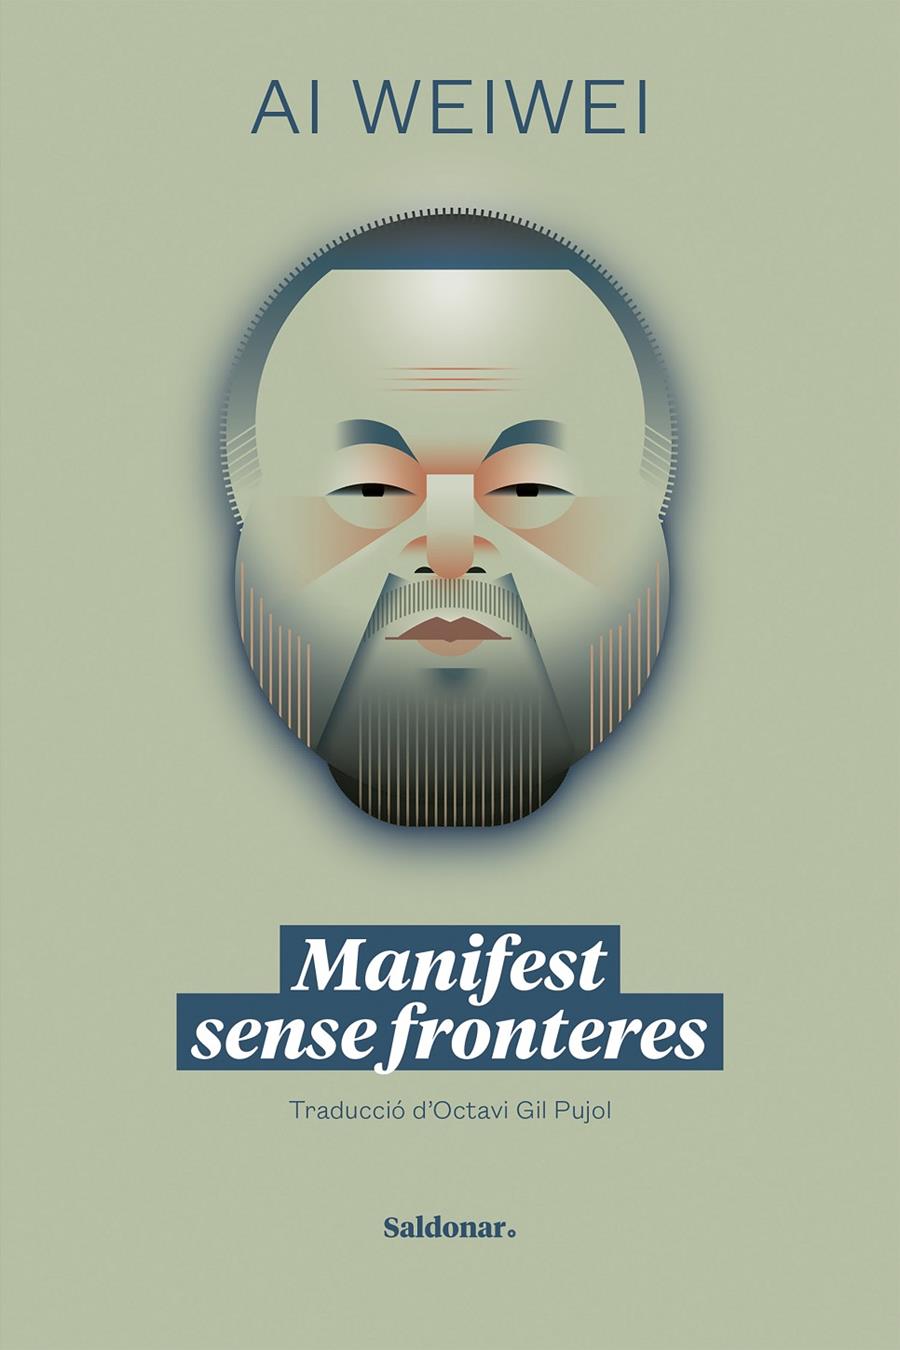 Manifest sense fronteres | Weiwei, Ai | Cooperativa autogestionària